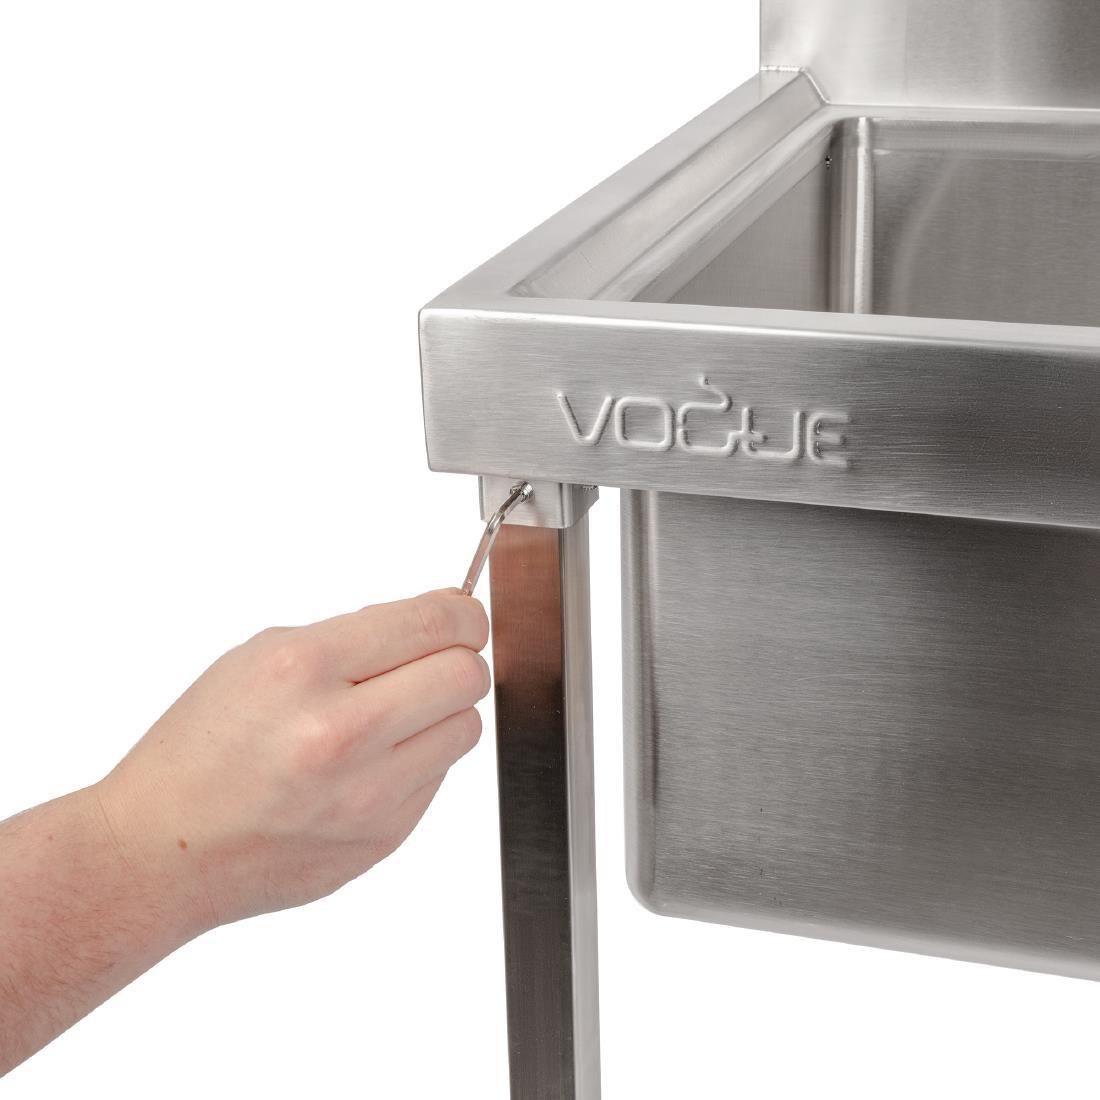 Vogue Stainless Steel Mop Sink - GL281  - 7